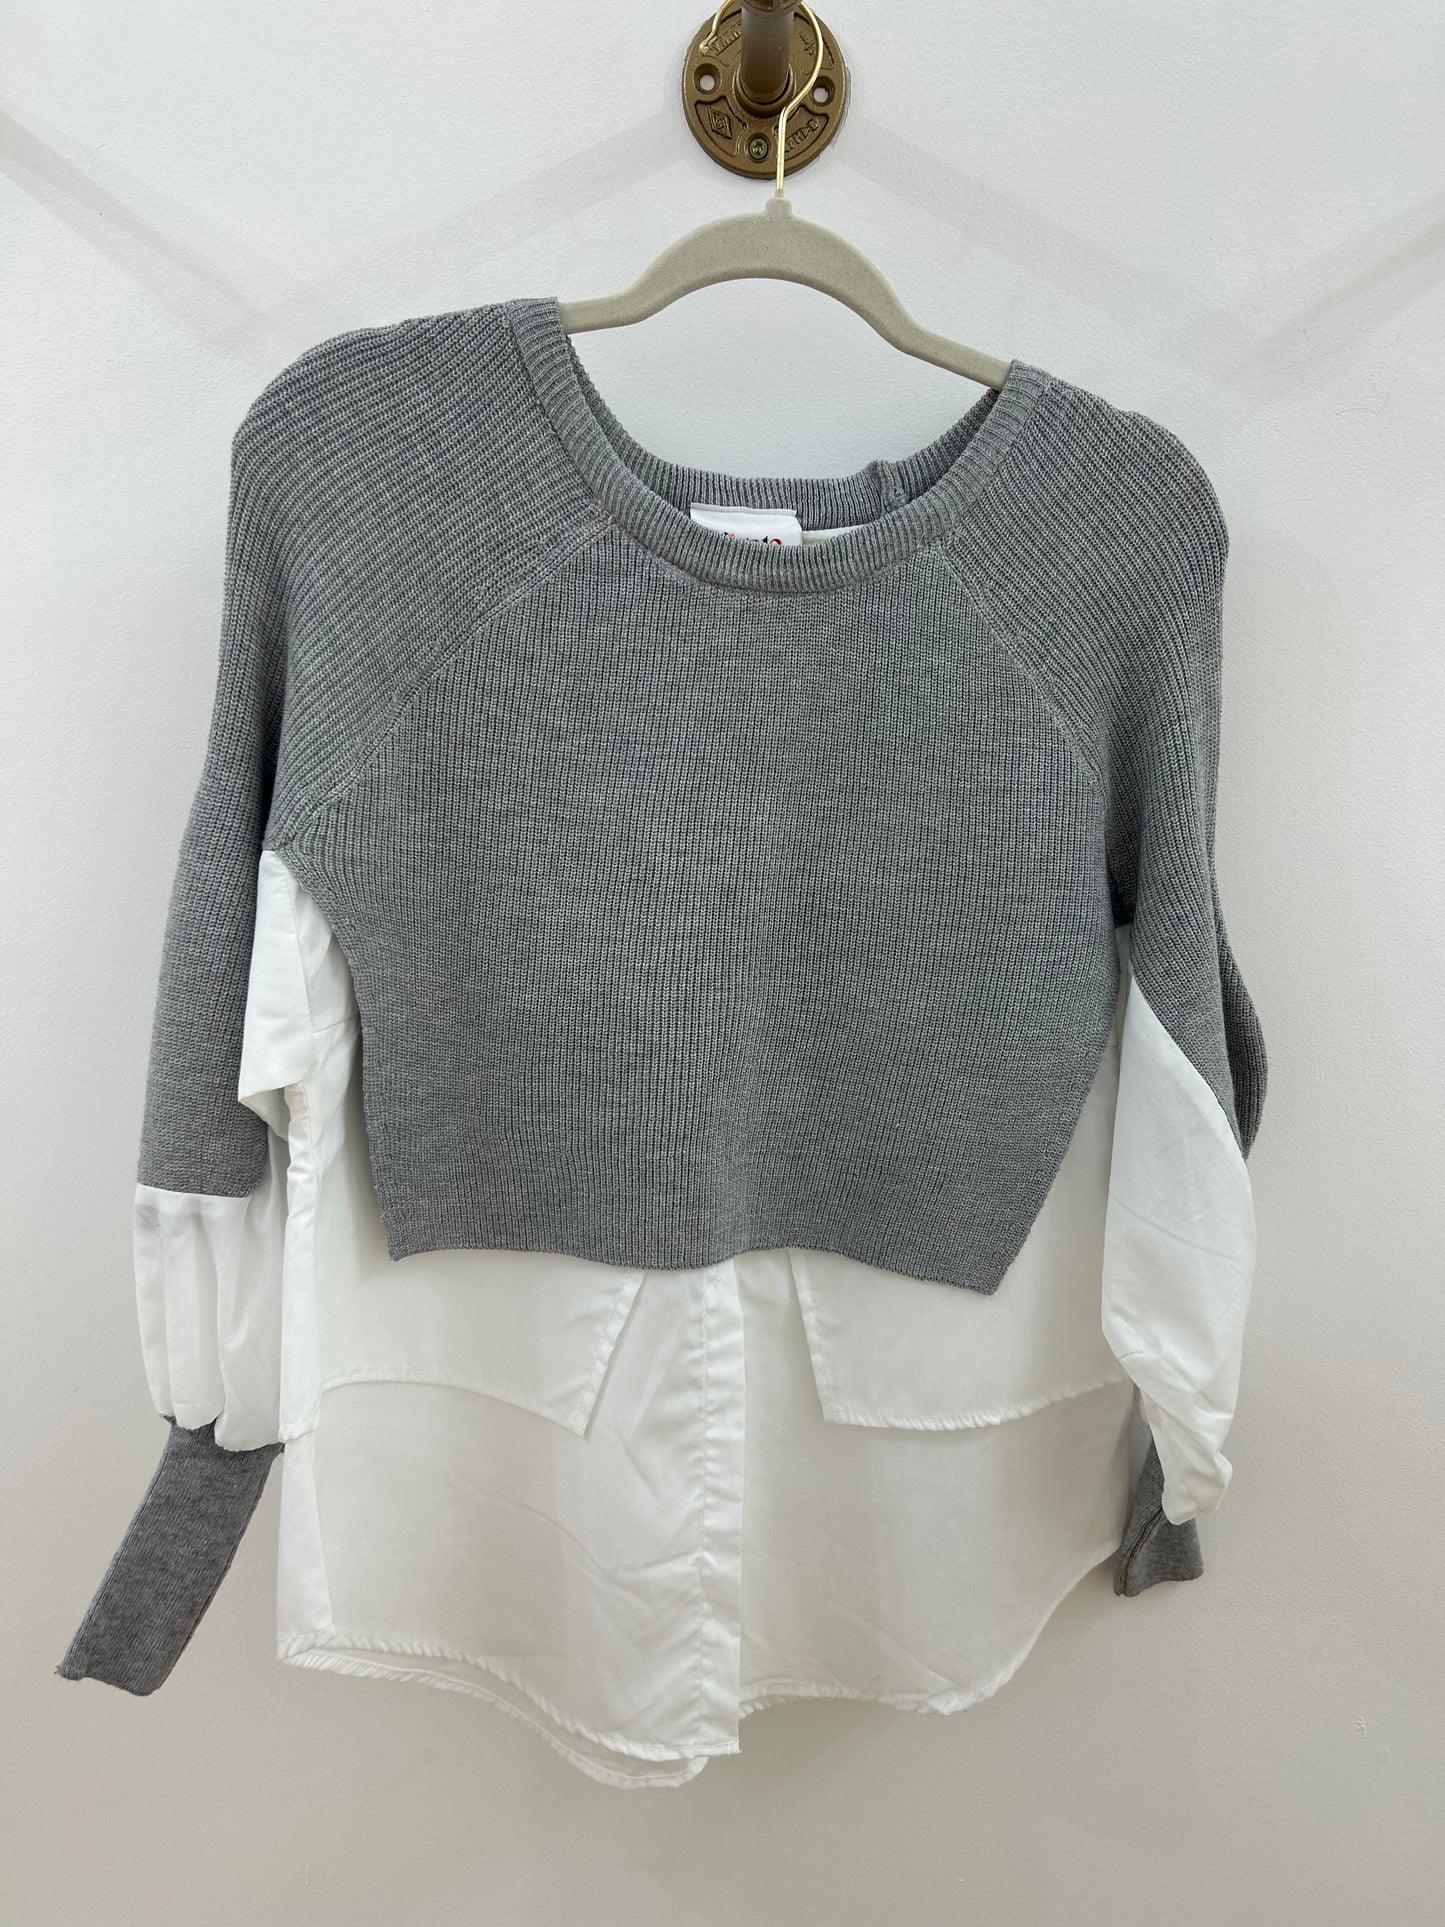 The Grey Sweatervest